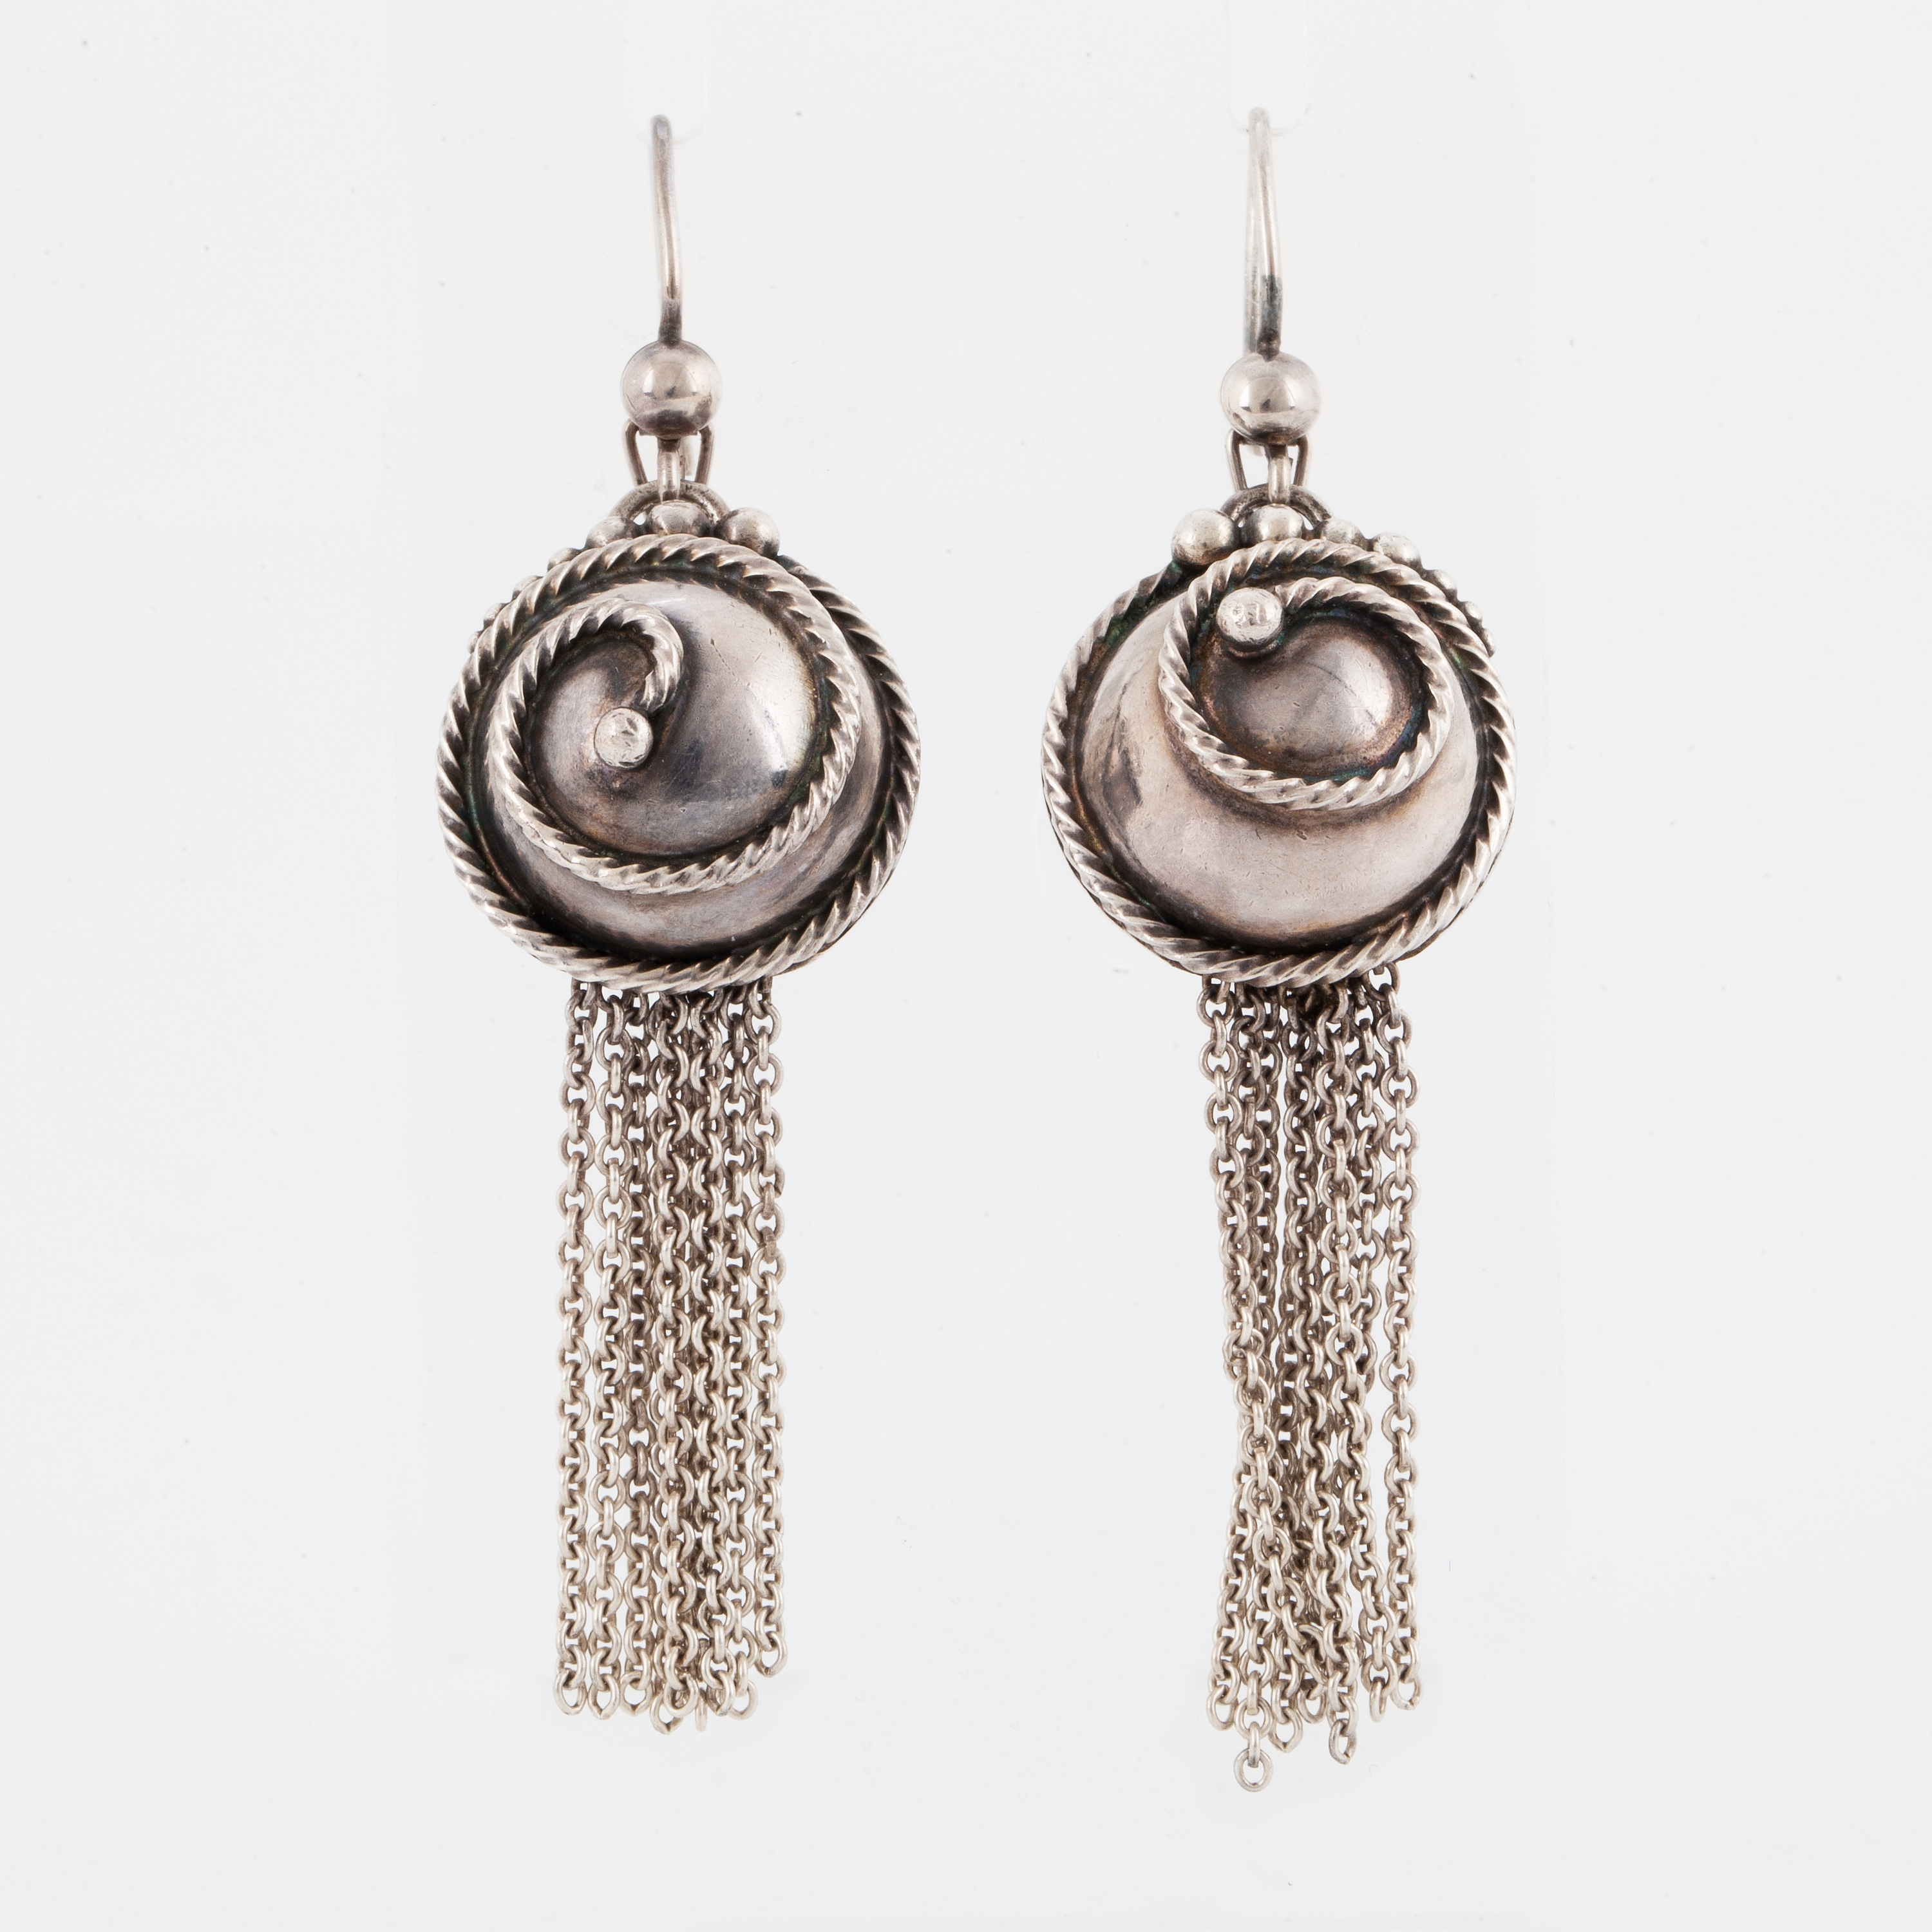 earrings by Rosa Taikon, Bernd Janusch, 1979